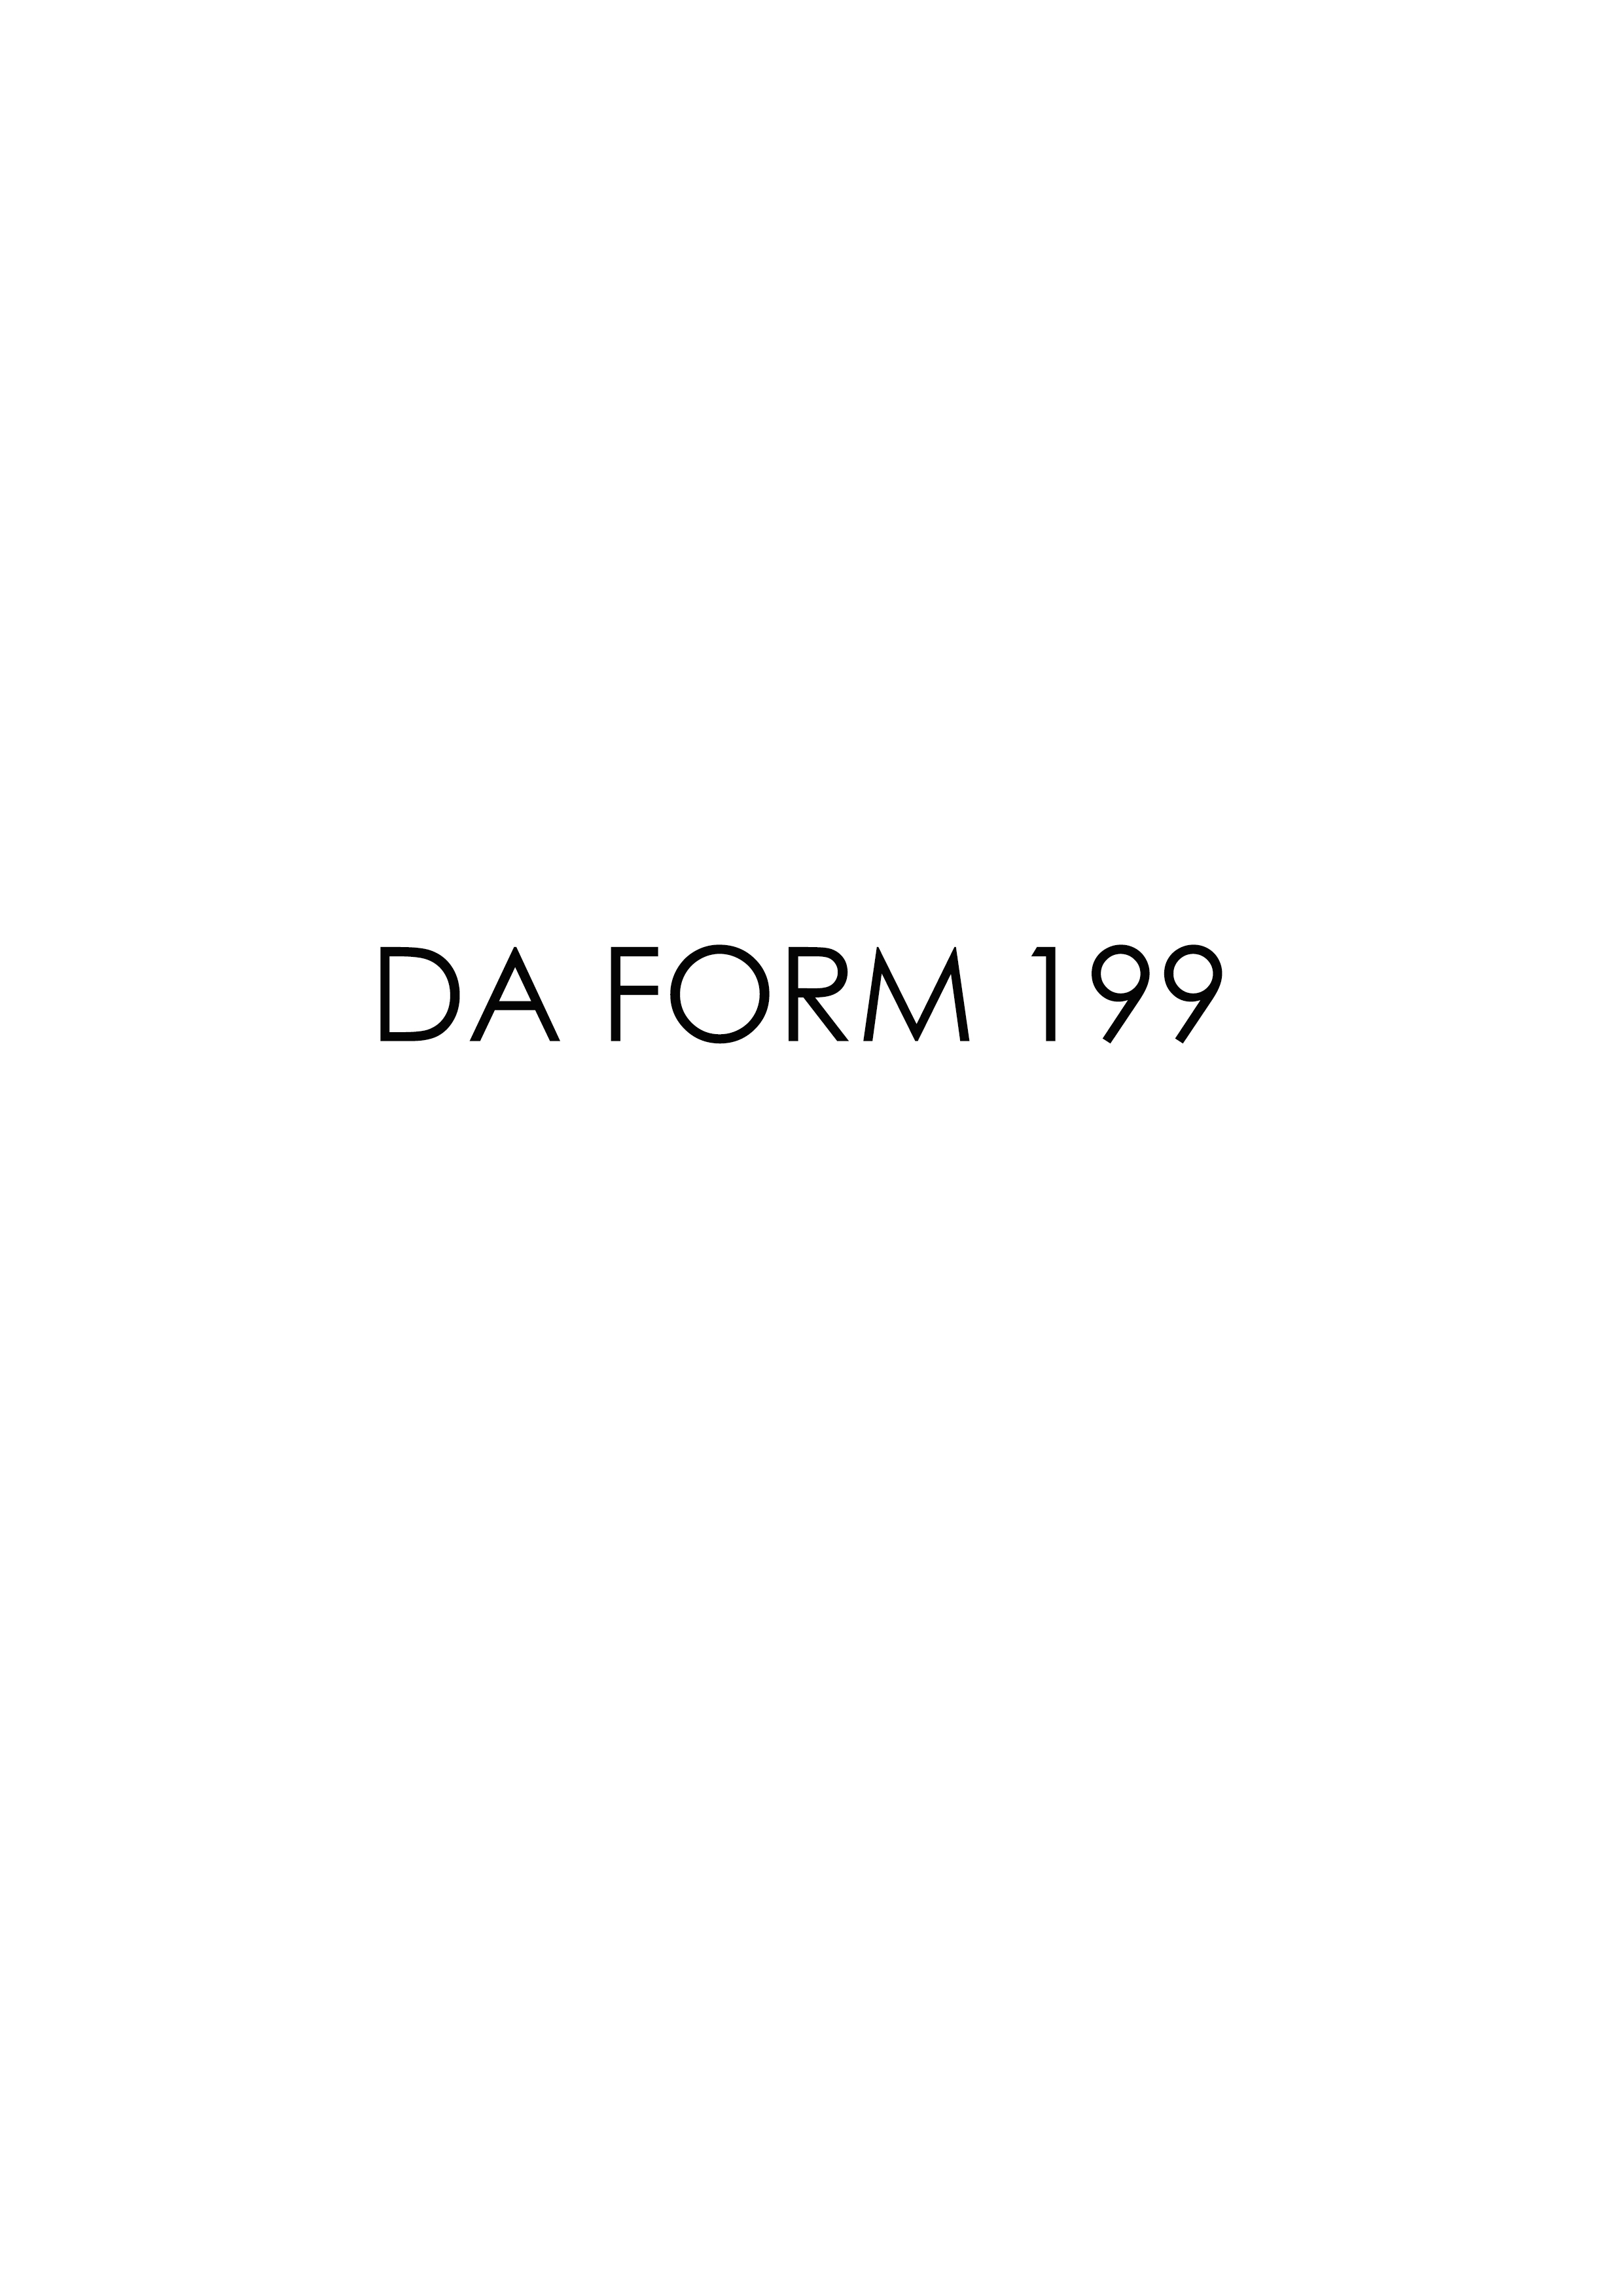 Download da 199 Form